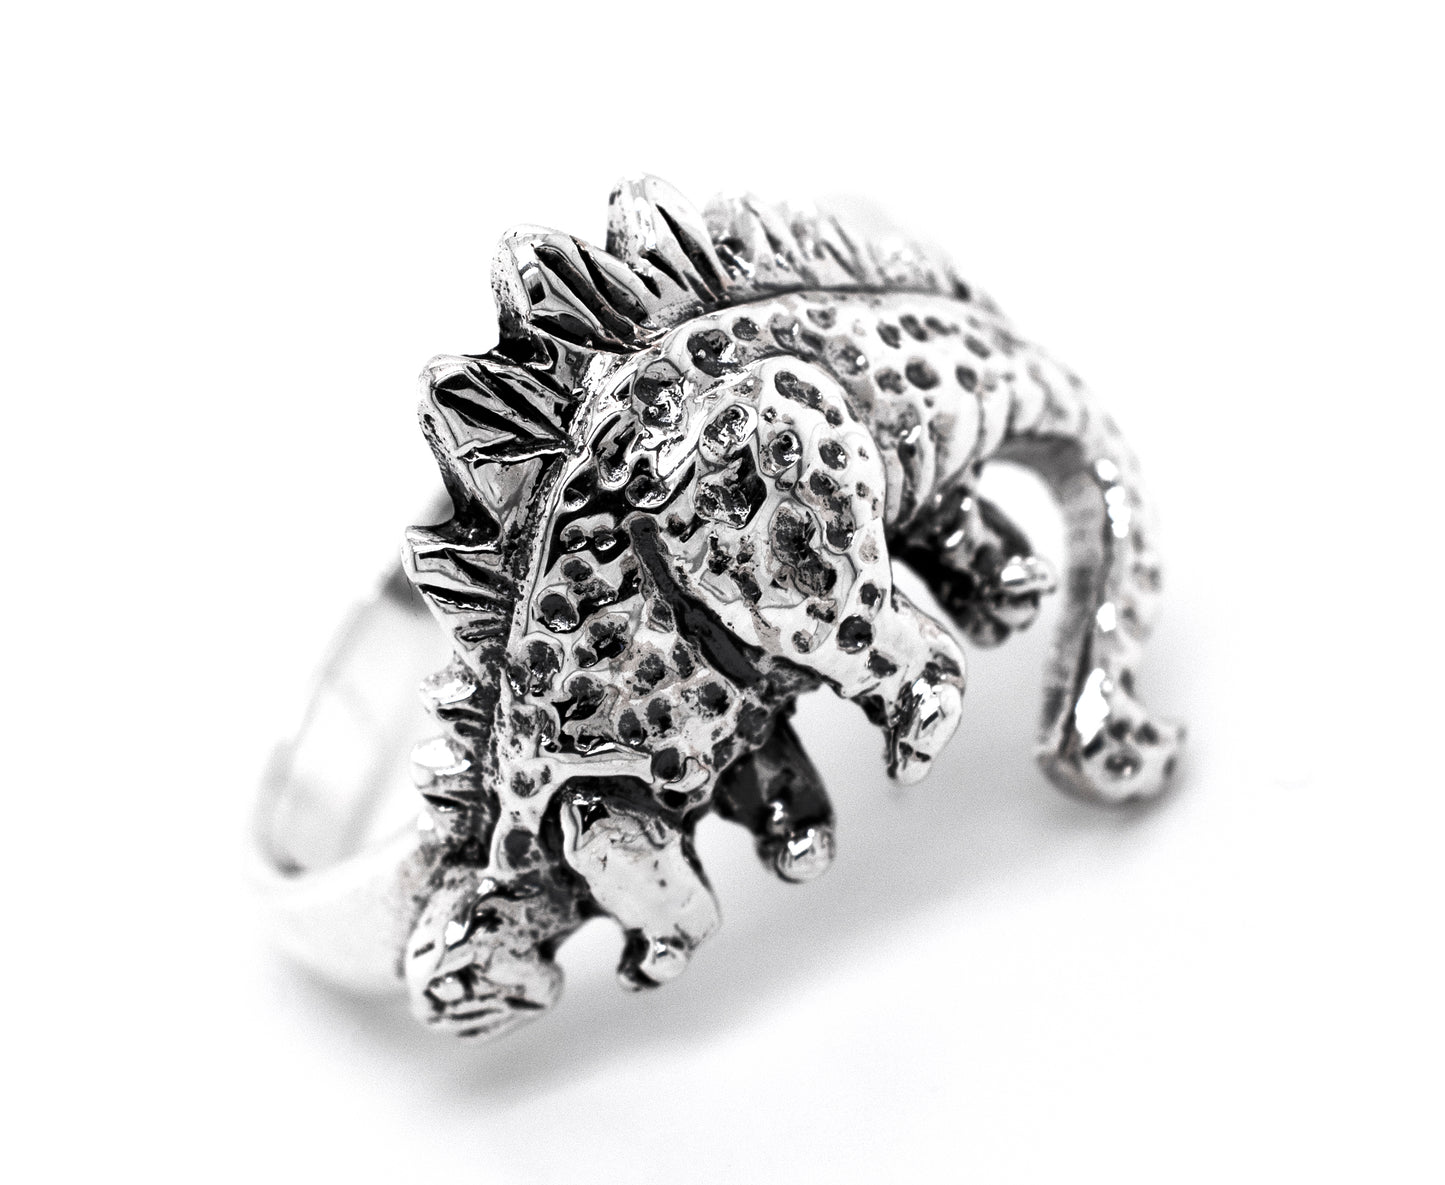 A Super Silver Stegosaurus Ring.